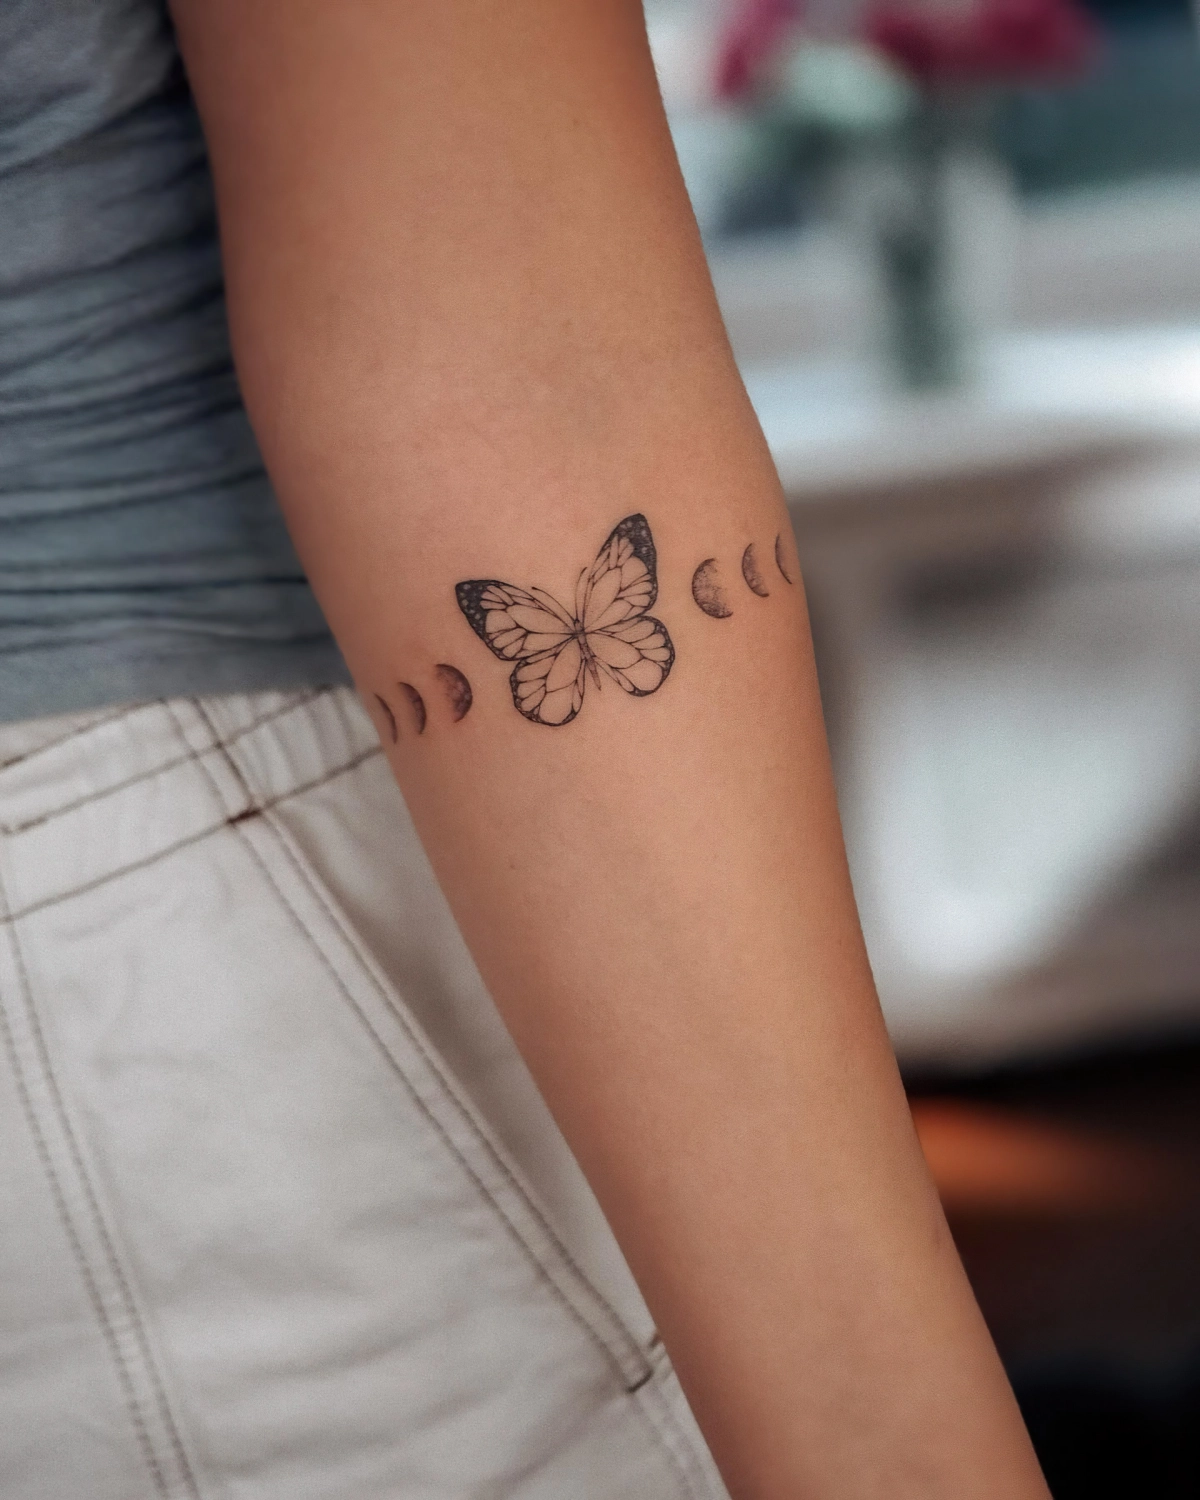 tatouage bras femme dessin papillon phases de la lune pantalon blanc debardeur